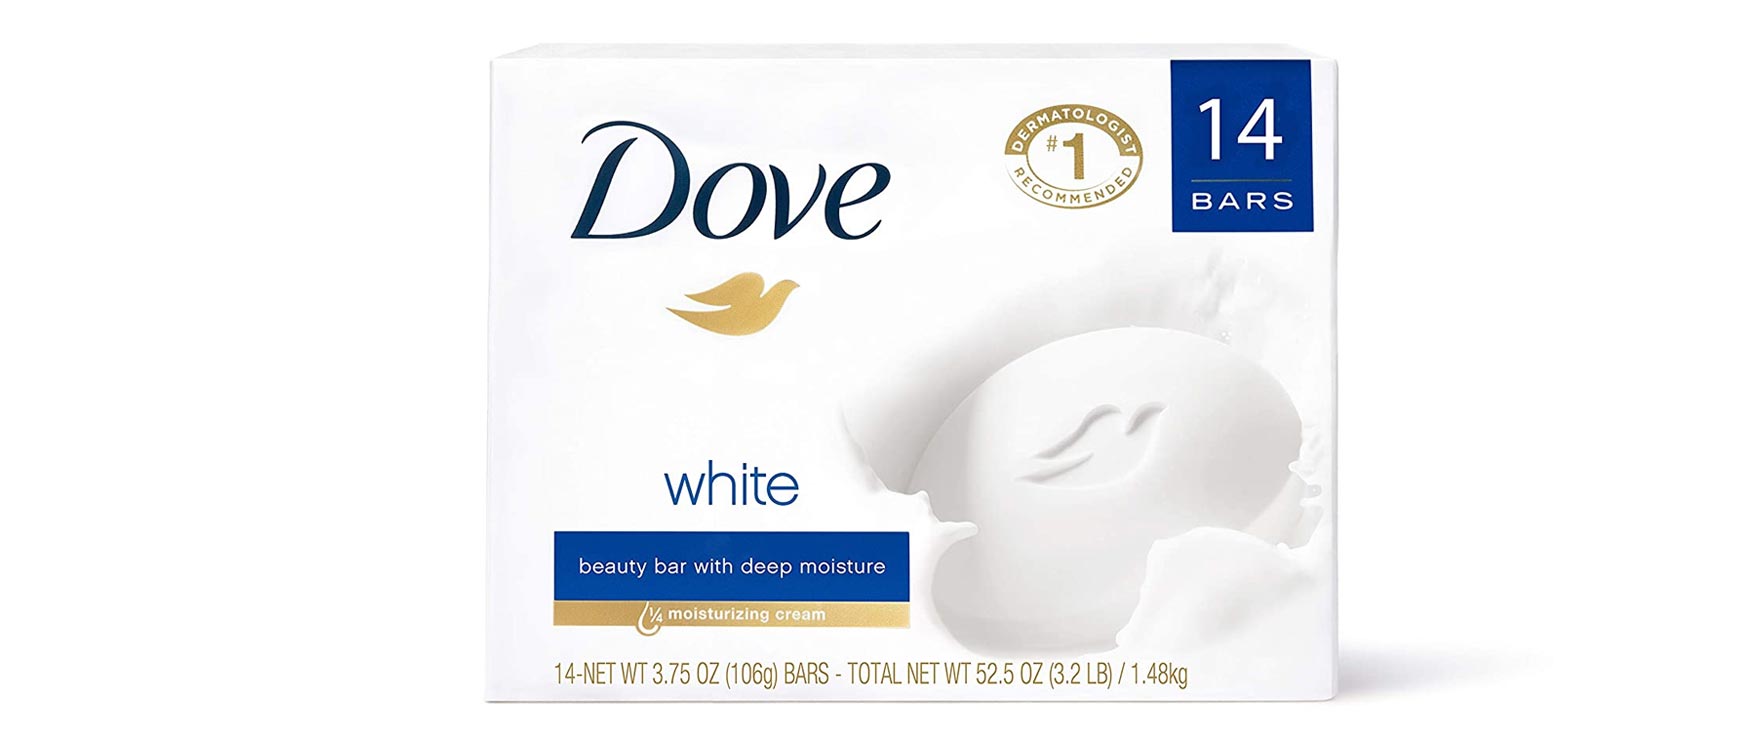 1. Dove Beauty Bar